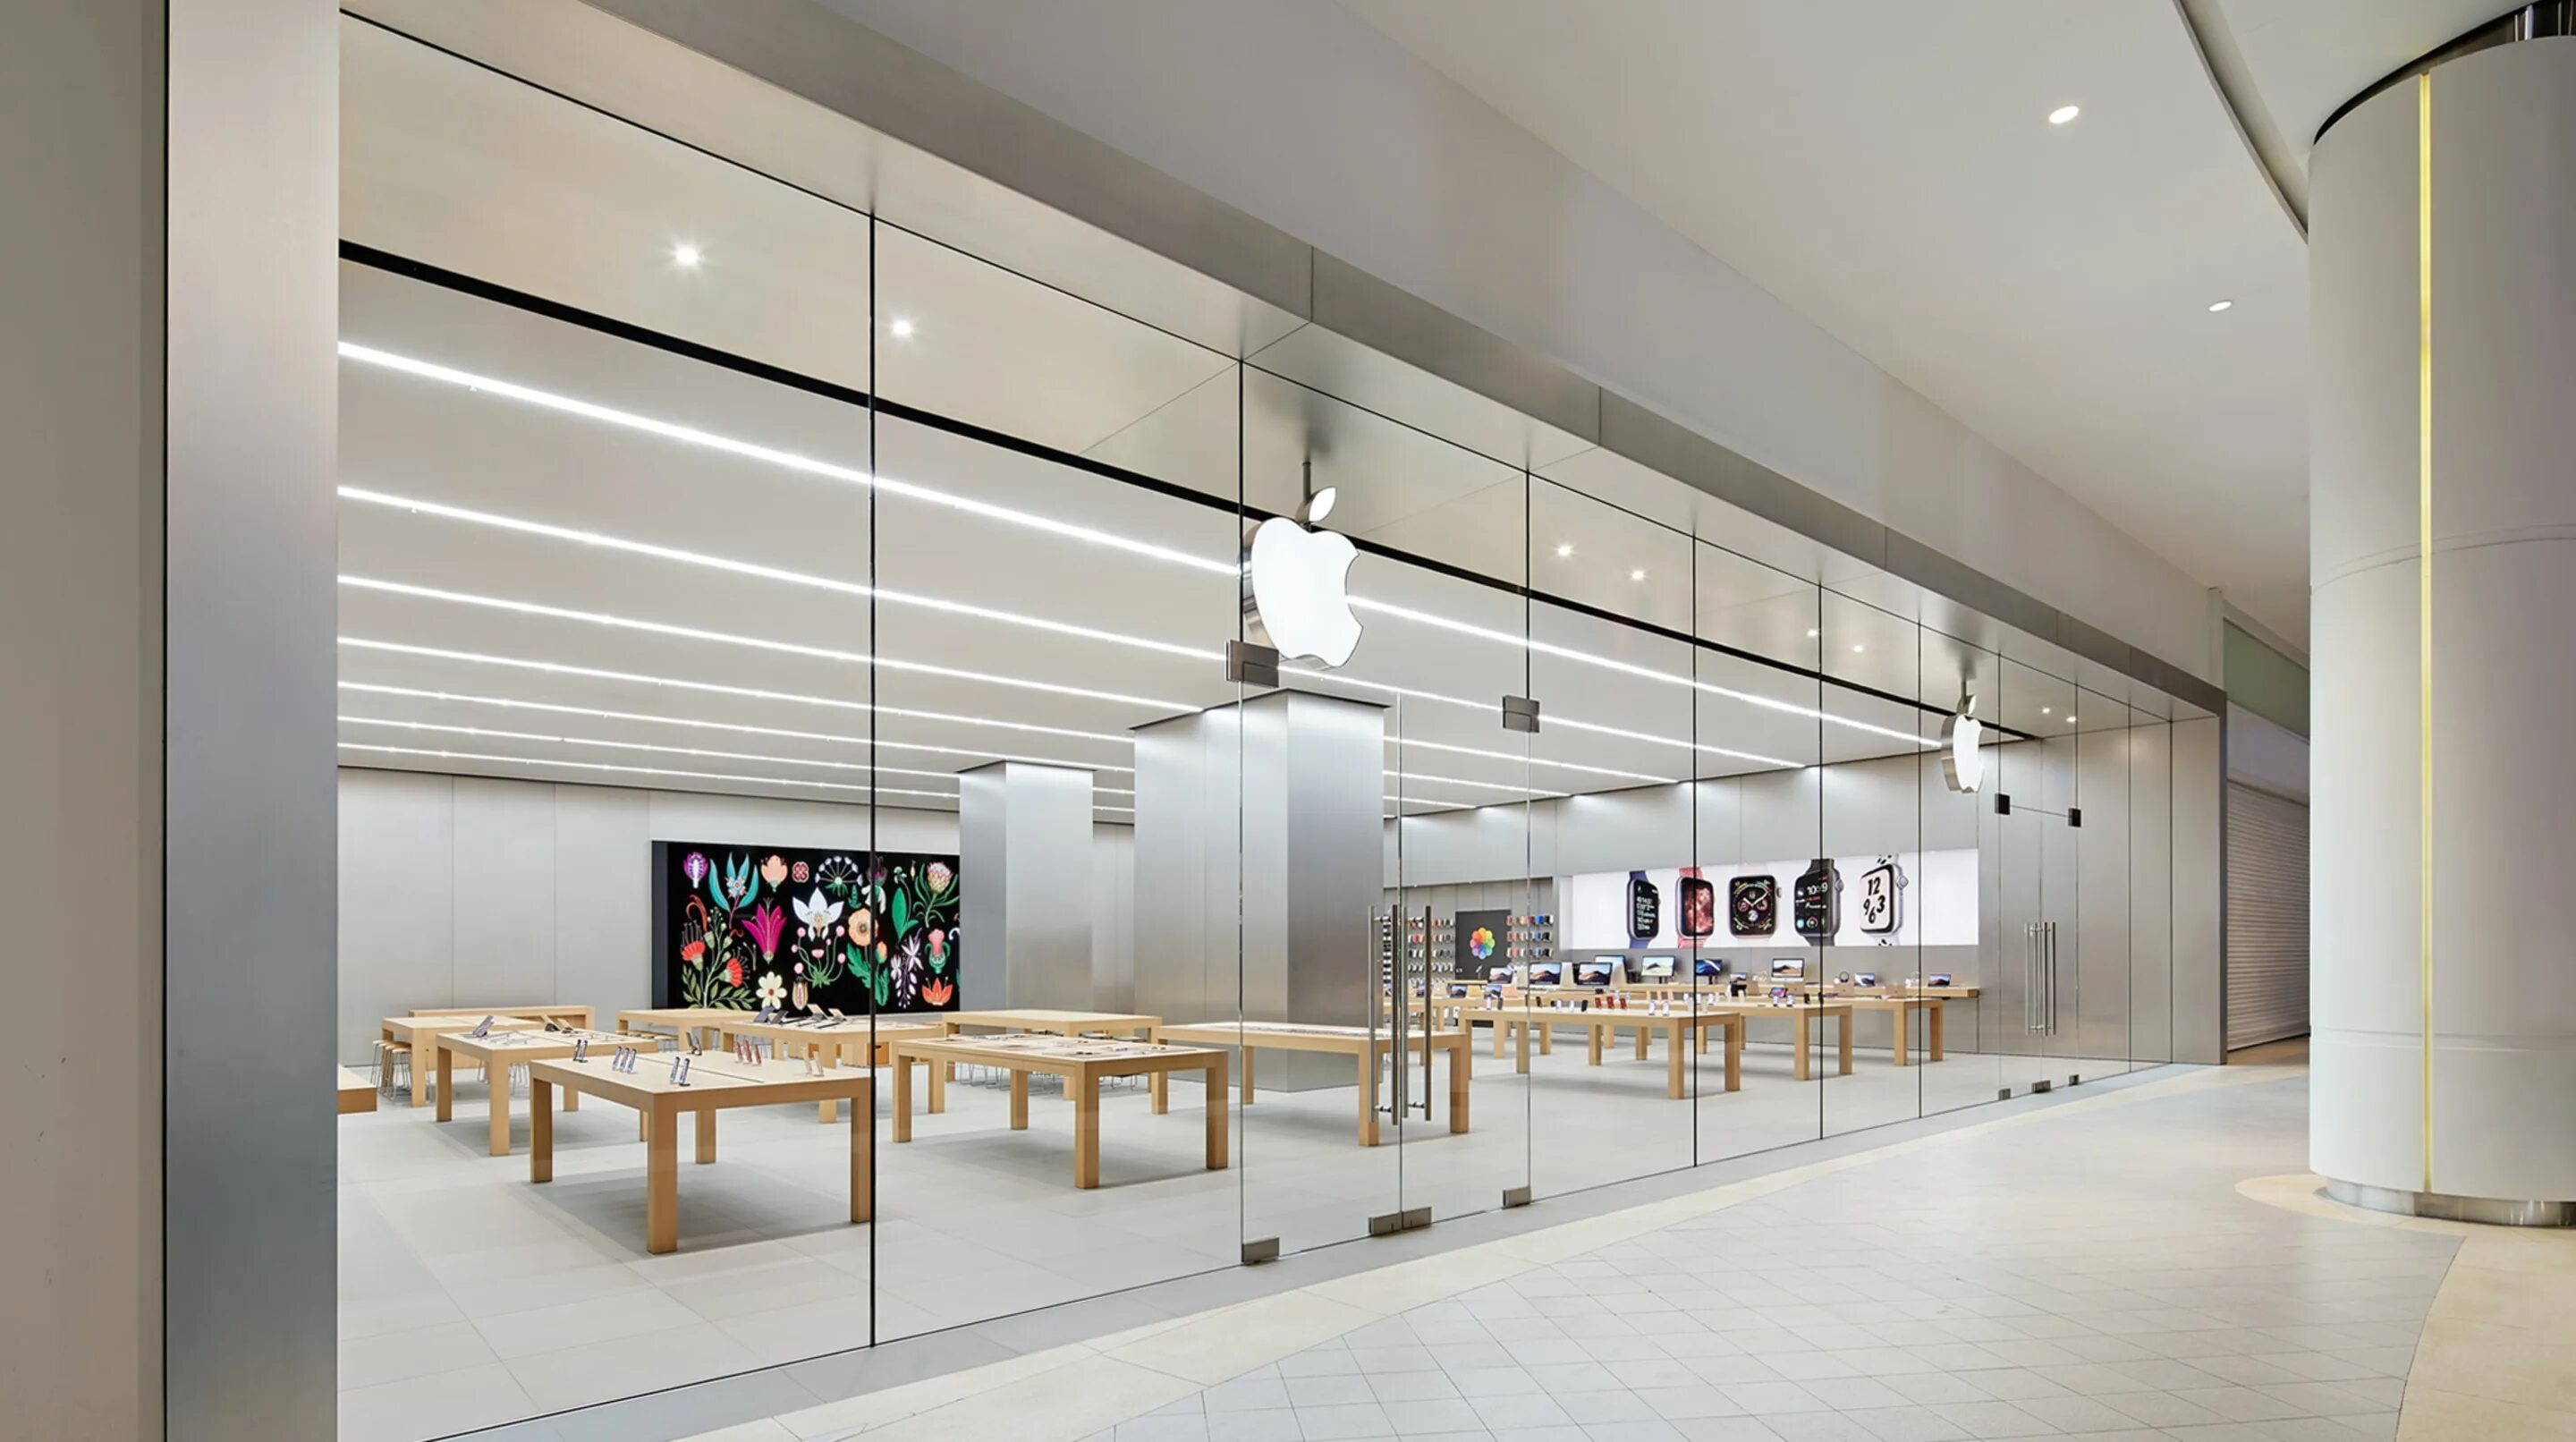 Apple turkey. Apple Store 2021. Apple stor в Турции. Apple Store Istanbul. Apple Store stambul.